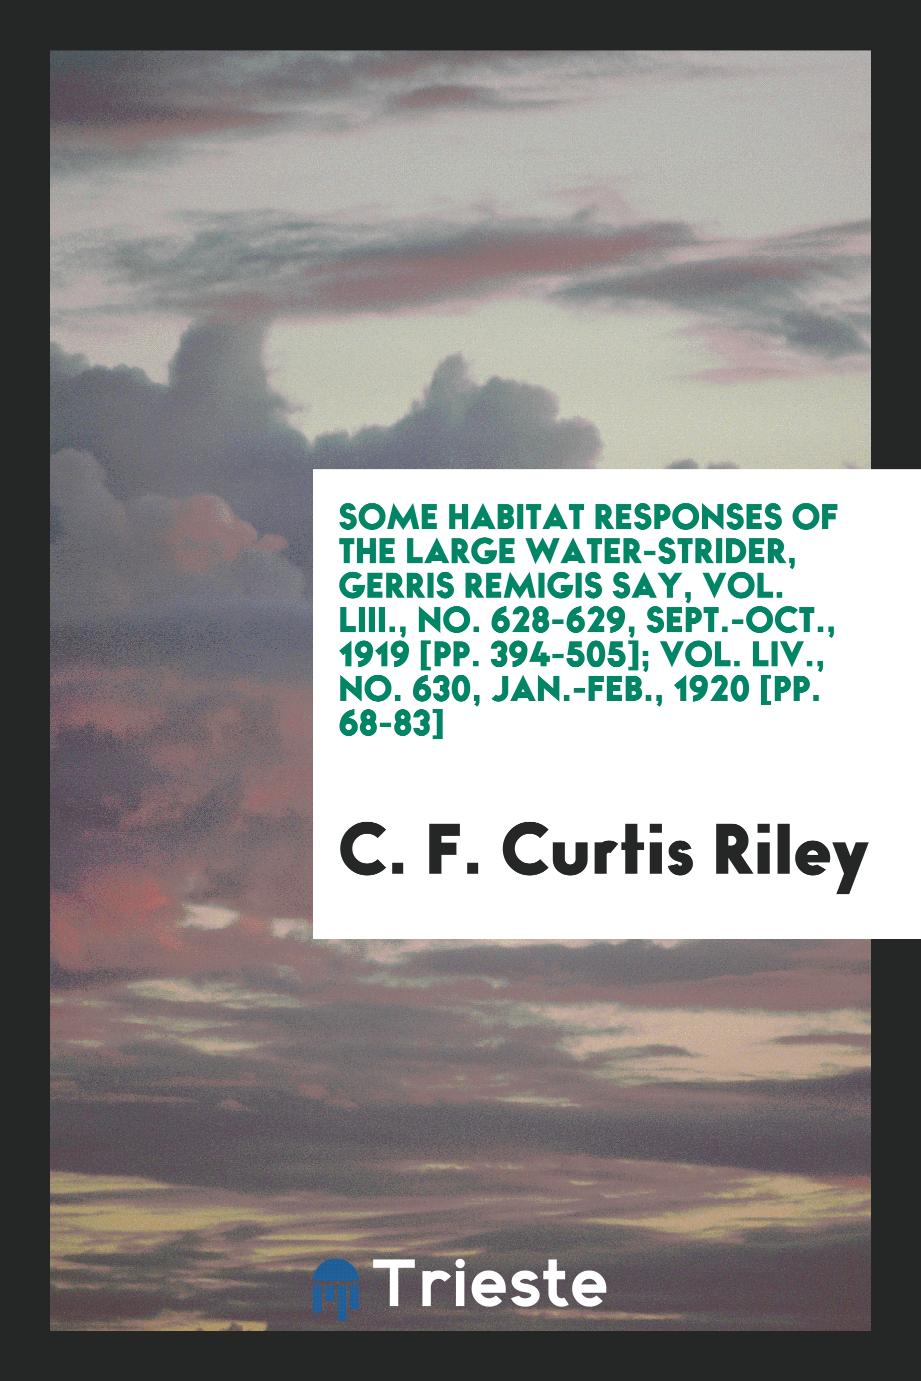 Some habitat responses of the large water-strider, Gerris remigis Say, Vol. LIII., No. 628-629, sept.-oct., 1919 [pp. 394-505]; Vol. LIV., No. 630, jan.-feb., 1920 [pp. 68-83]